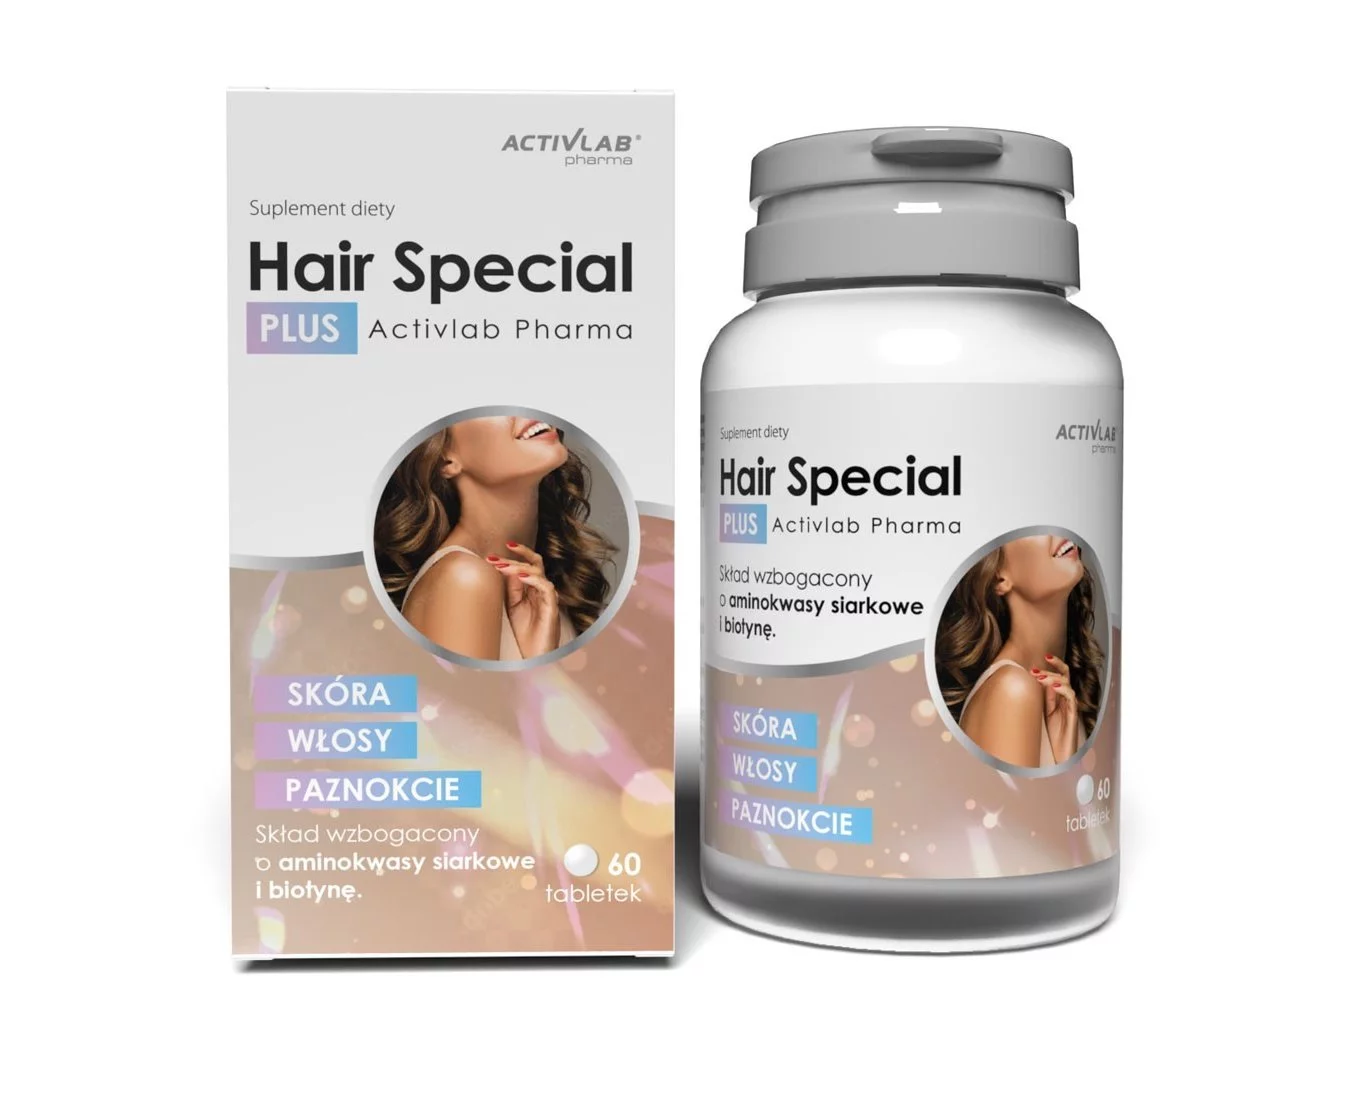 ActivLab Hair Special Activlab Pharma - (60 tabl)